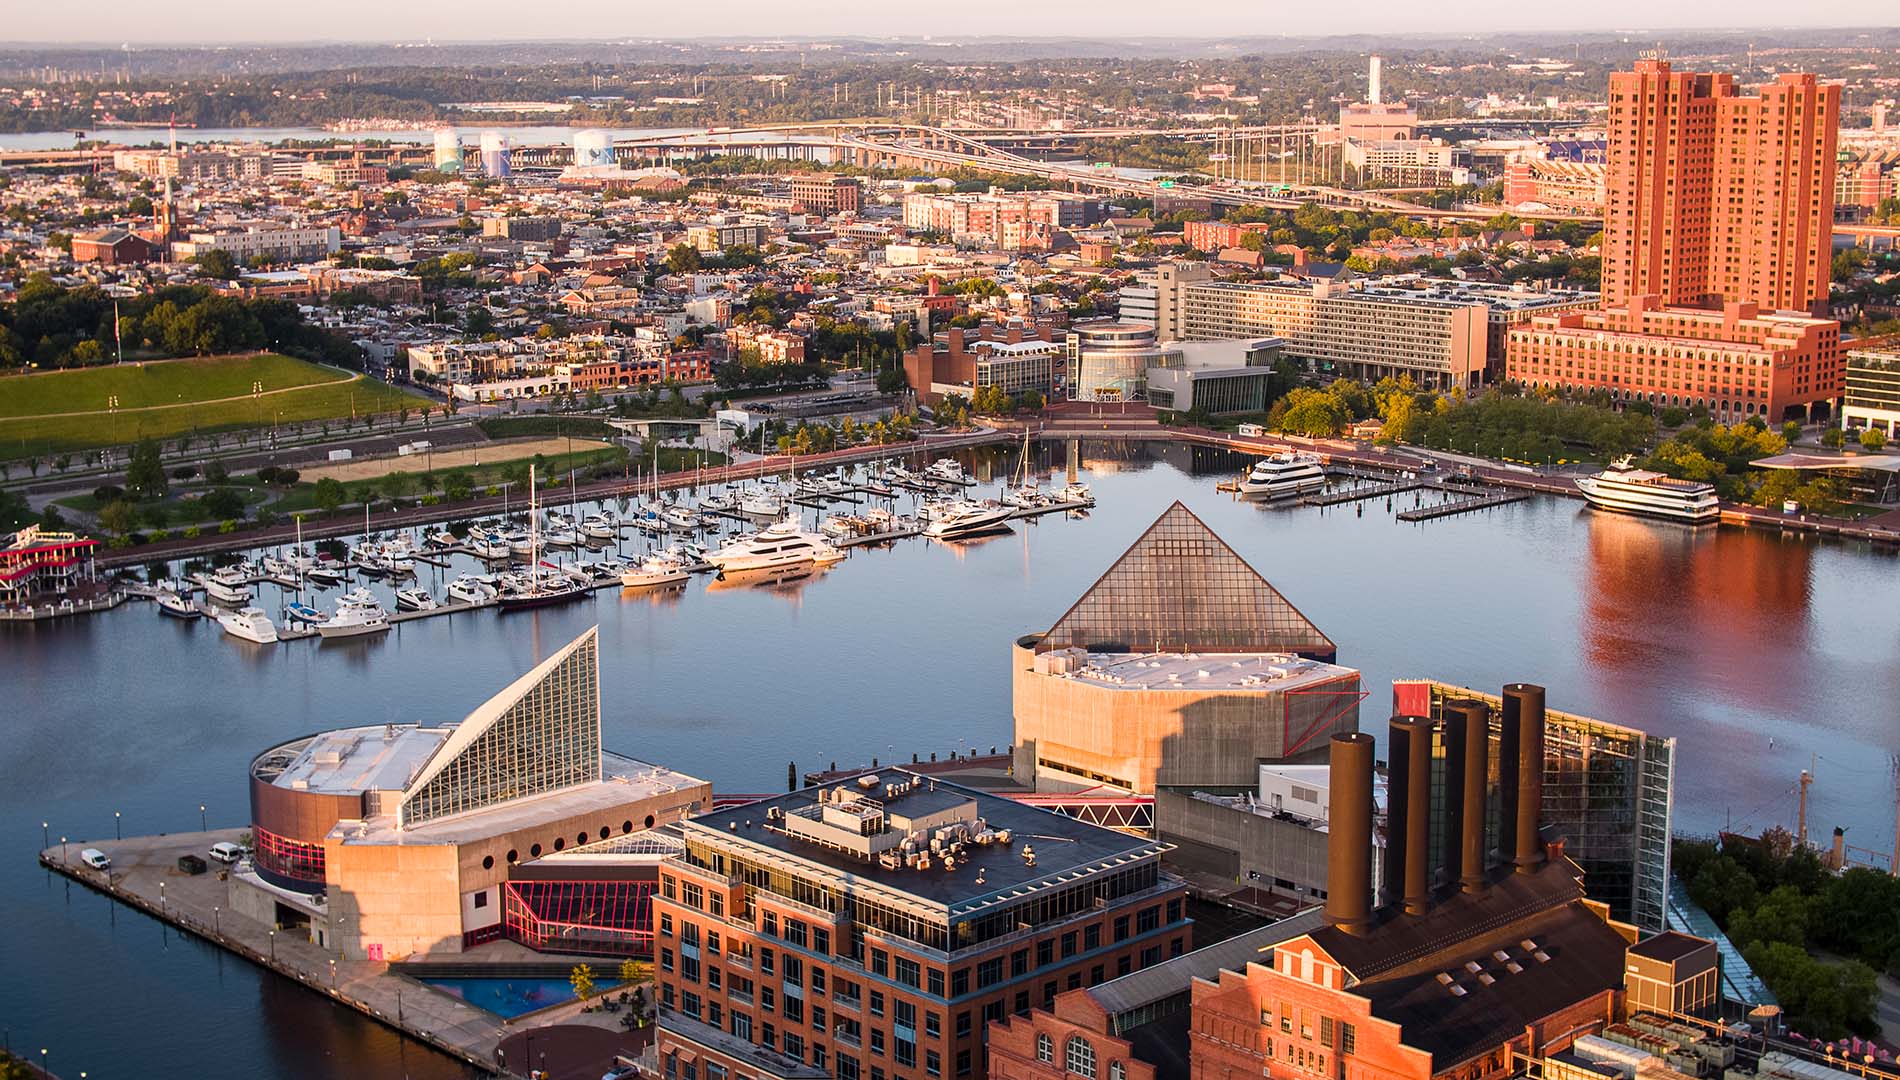 Aerial view of Baltimore's Inner Harbor